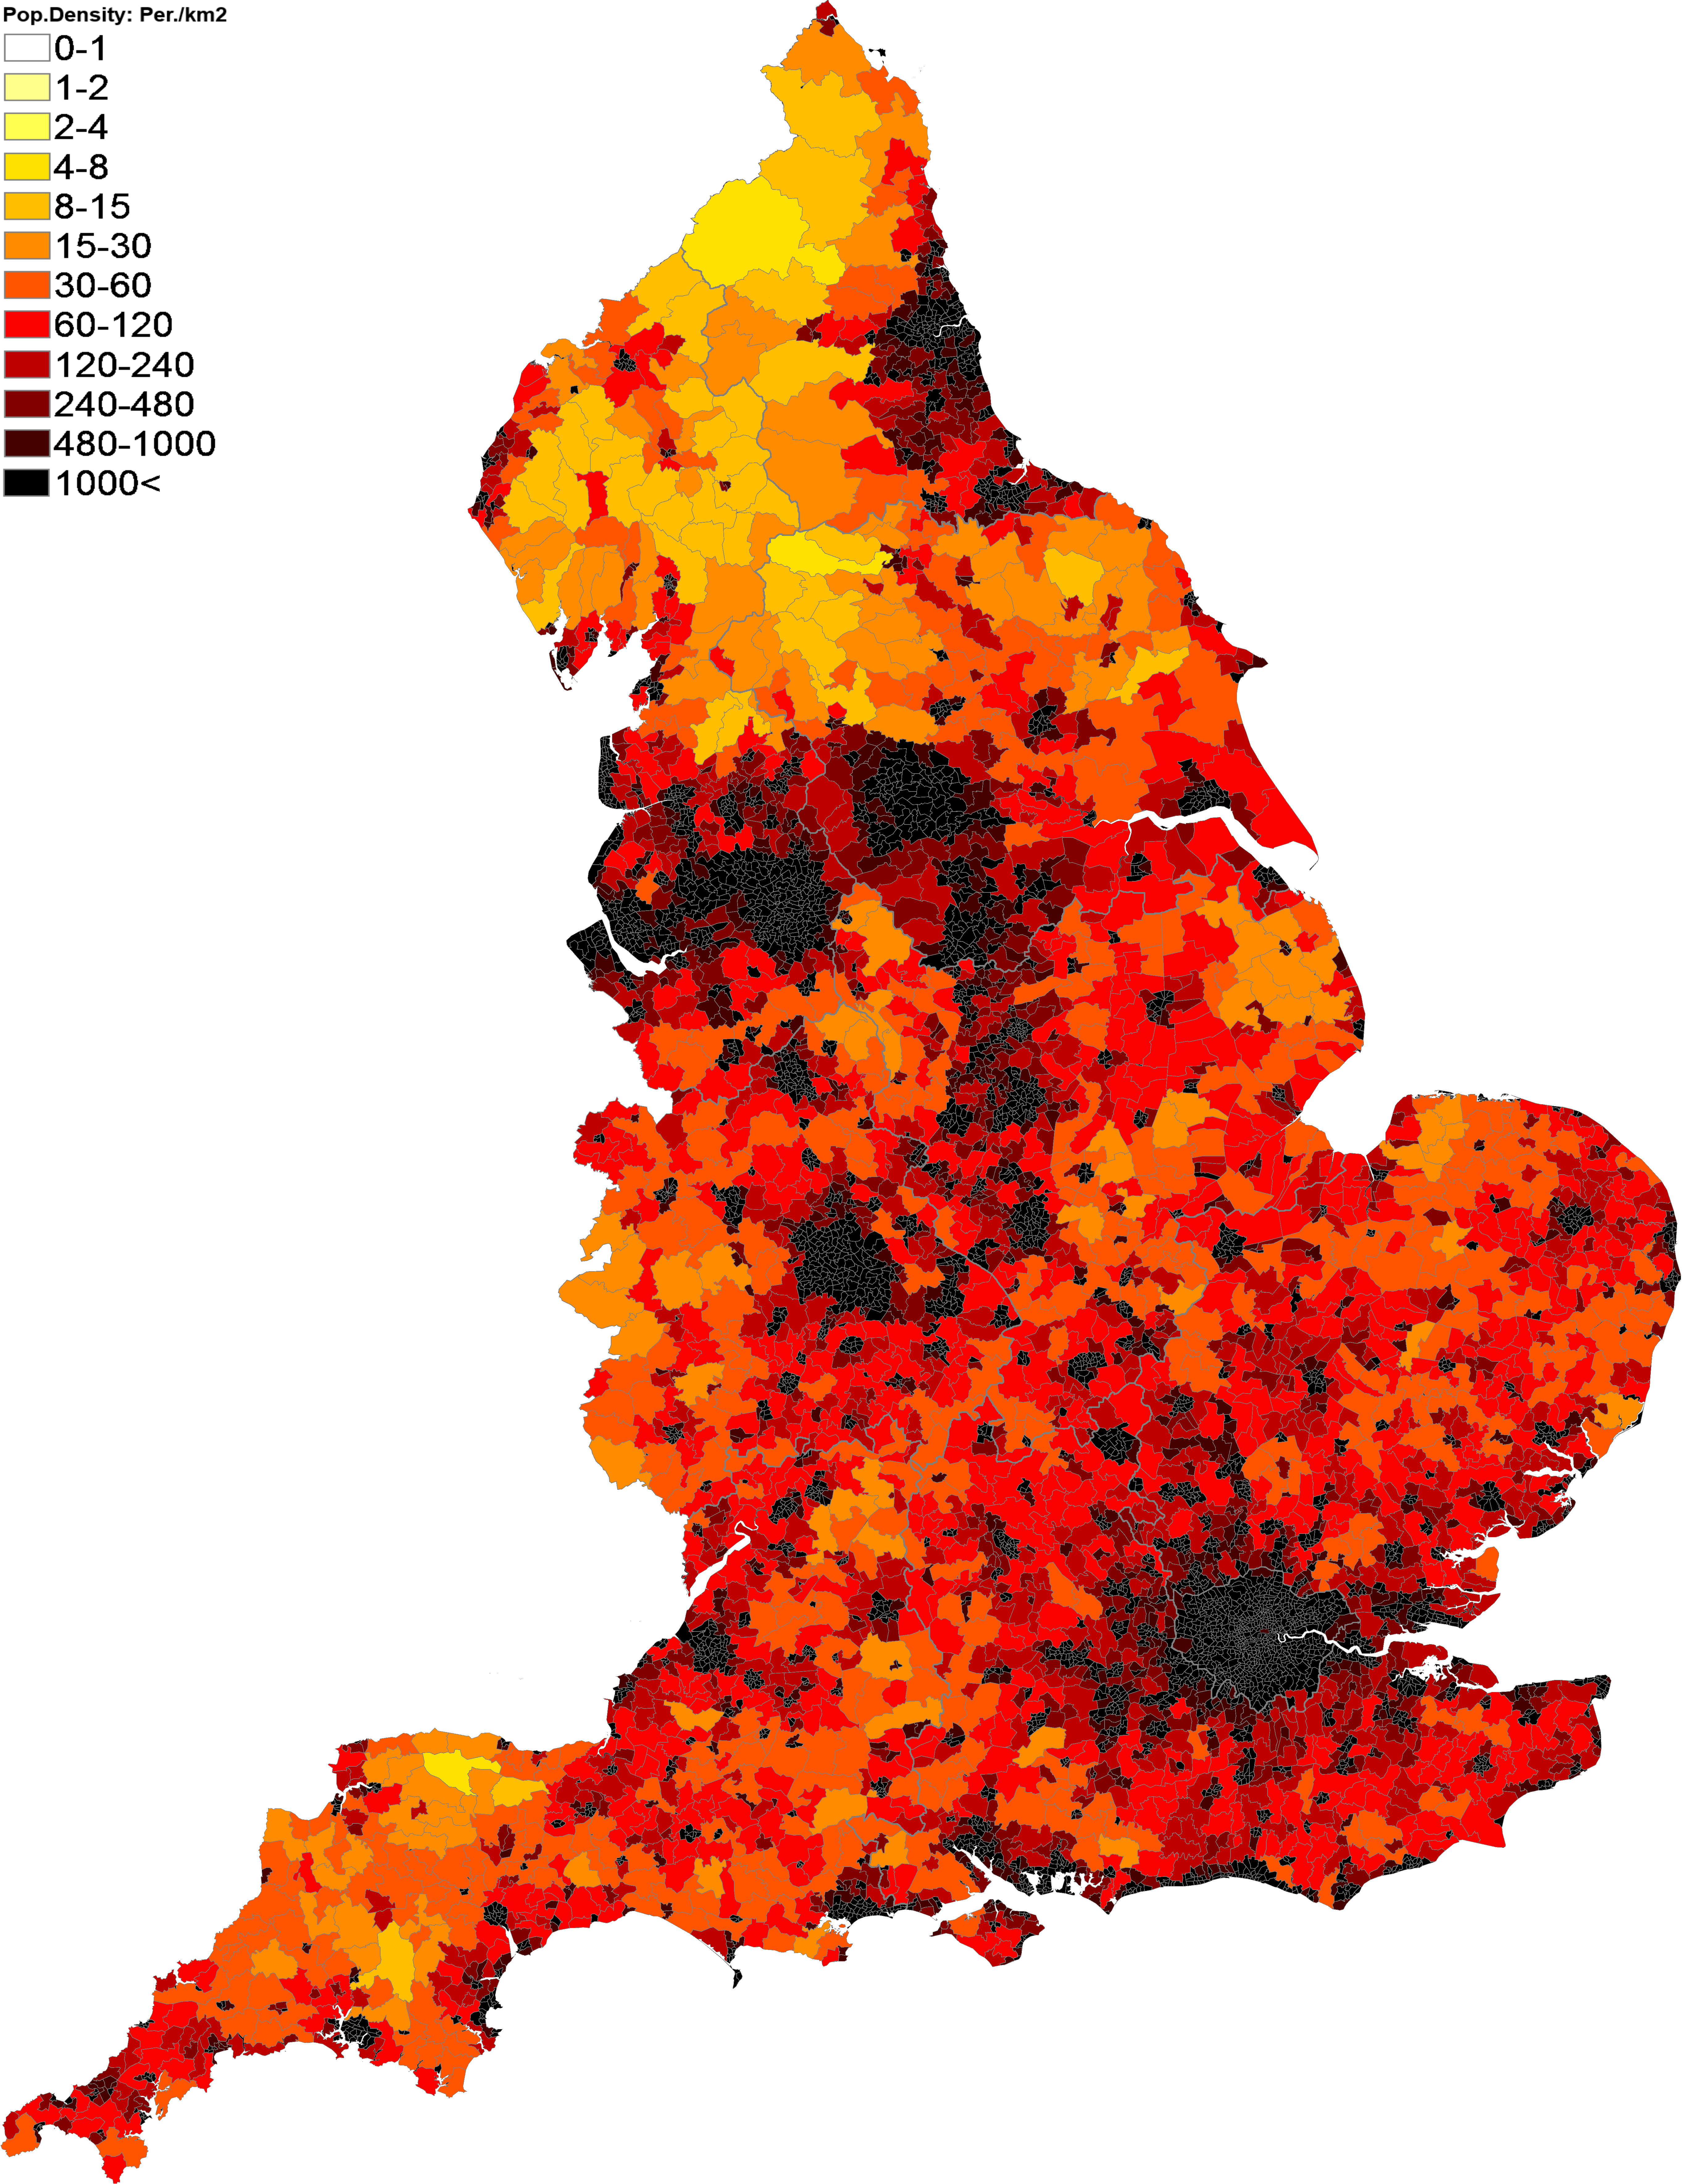 United Kingdom Population Density Map